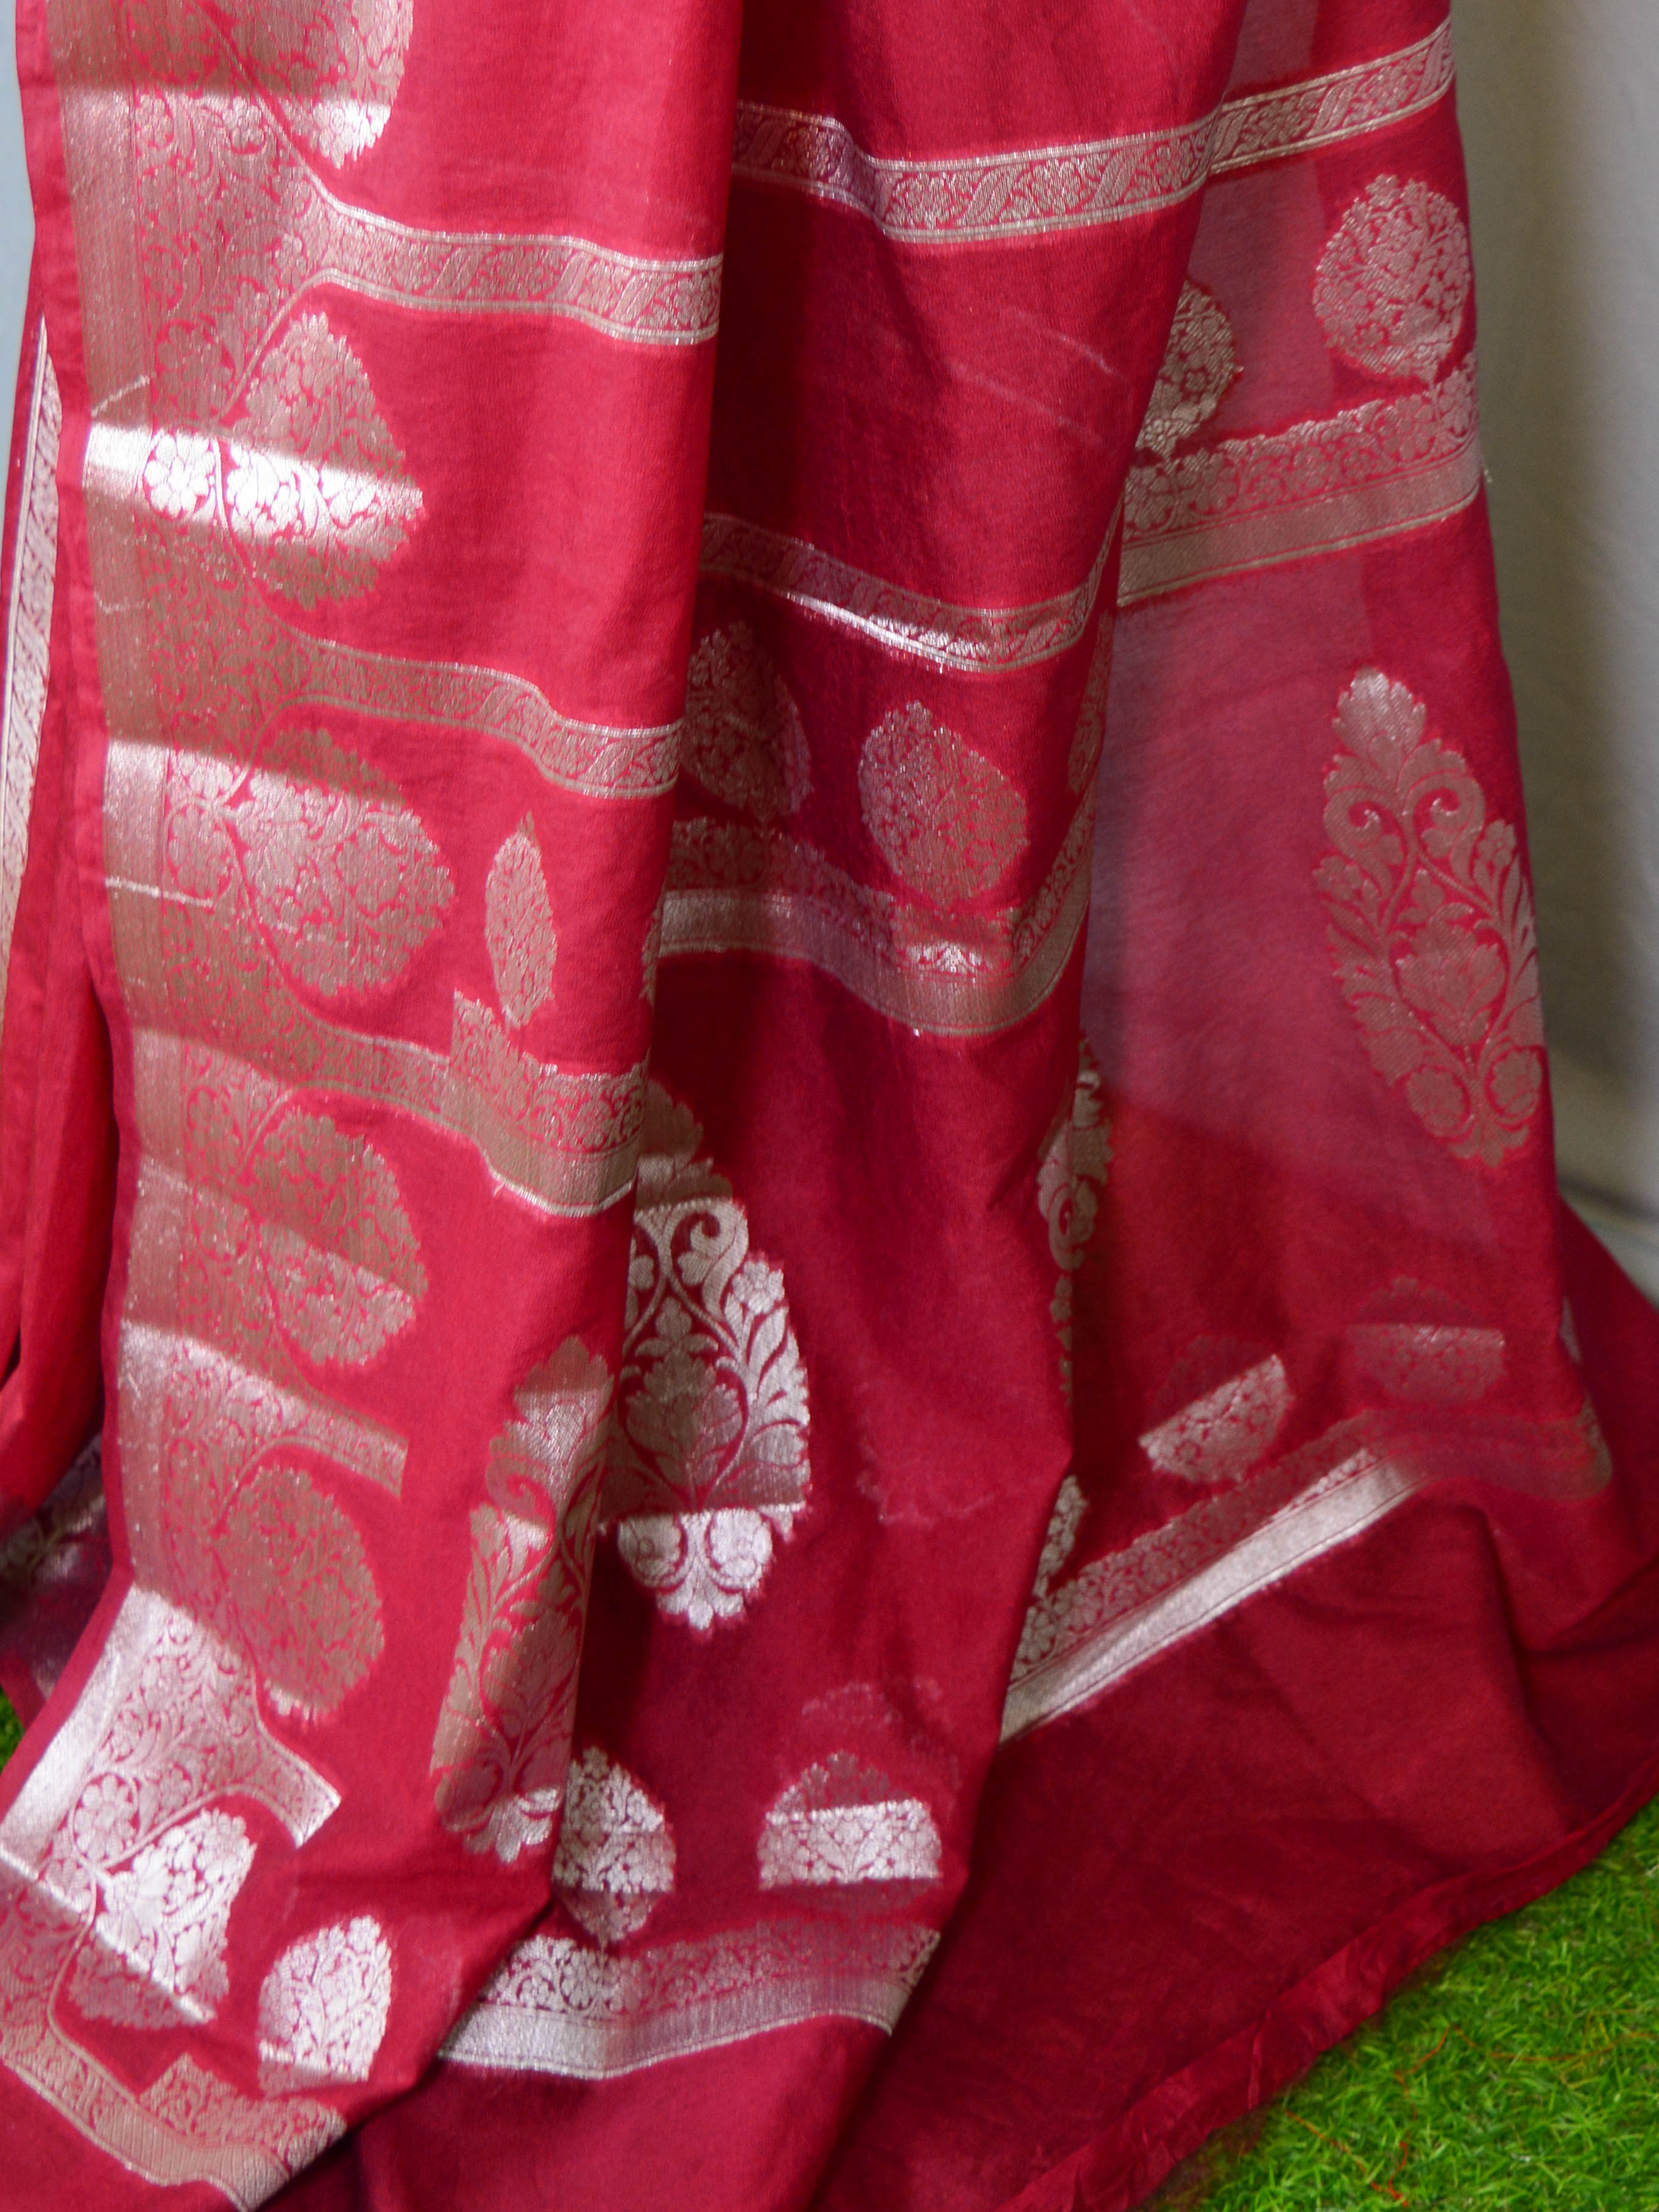 Banarasee Handwoven Semi-Chiffon Saree With Silver Zari Design & Contrast Blouse-Red